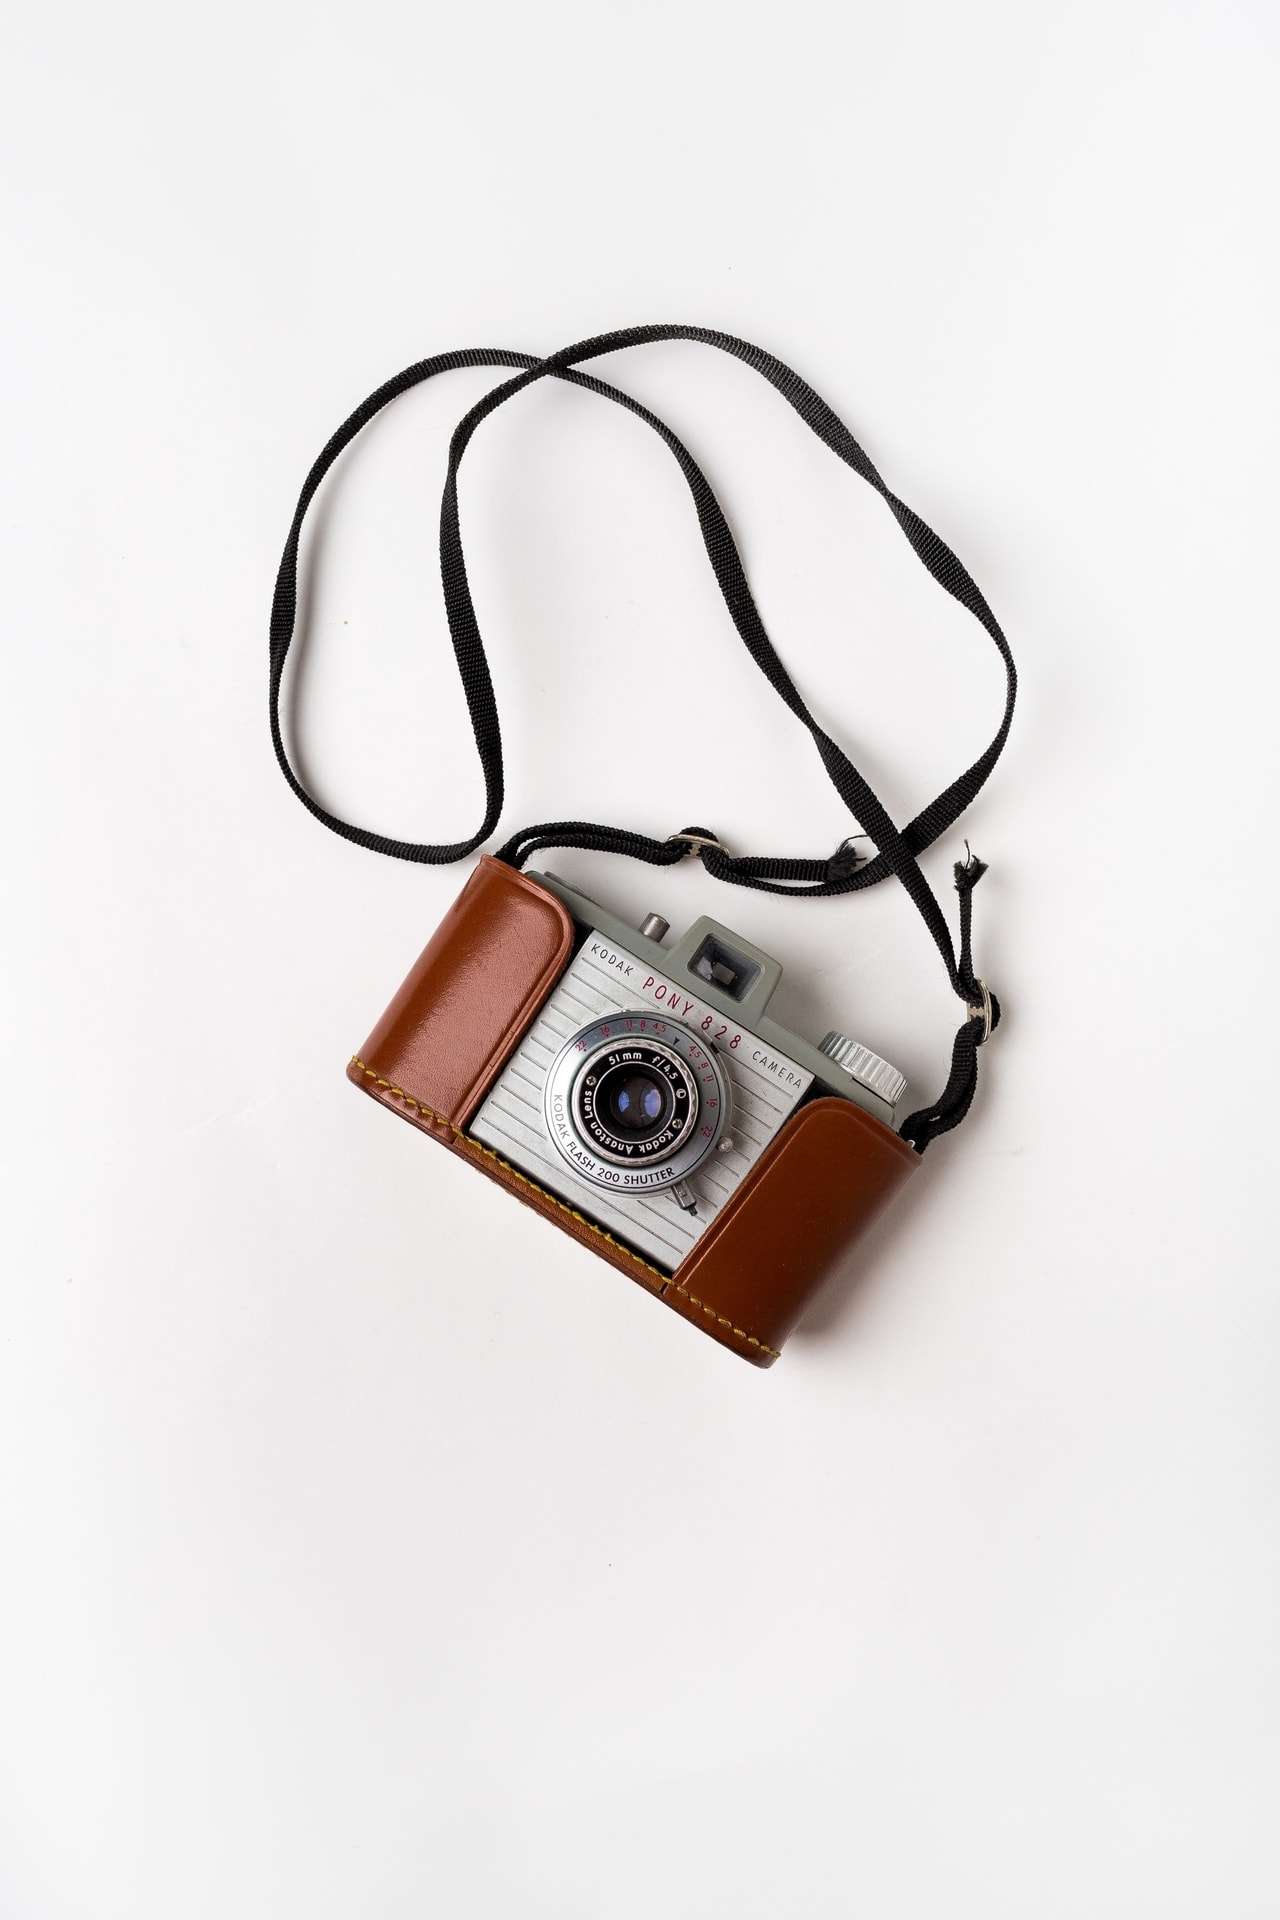 Vintage kodak photo camera with leather sheath and strap